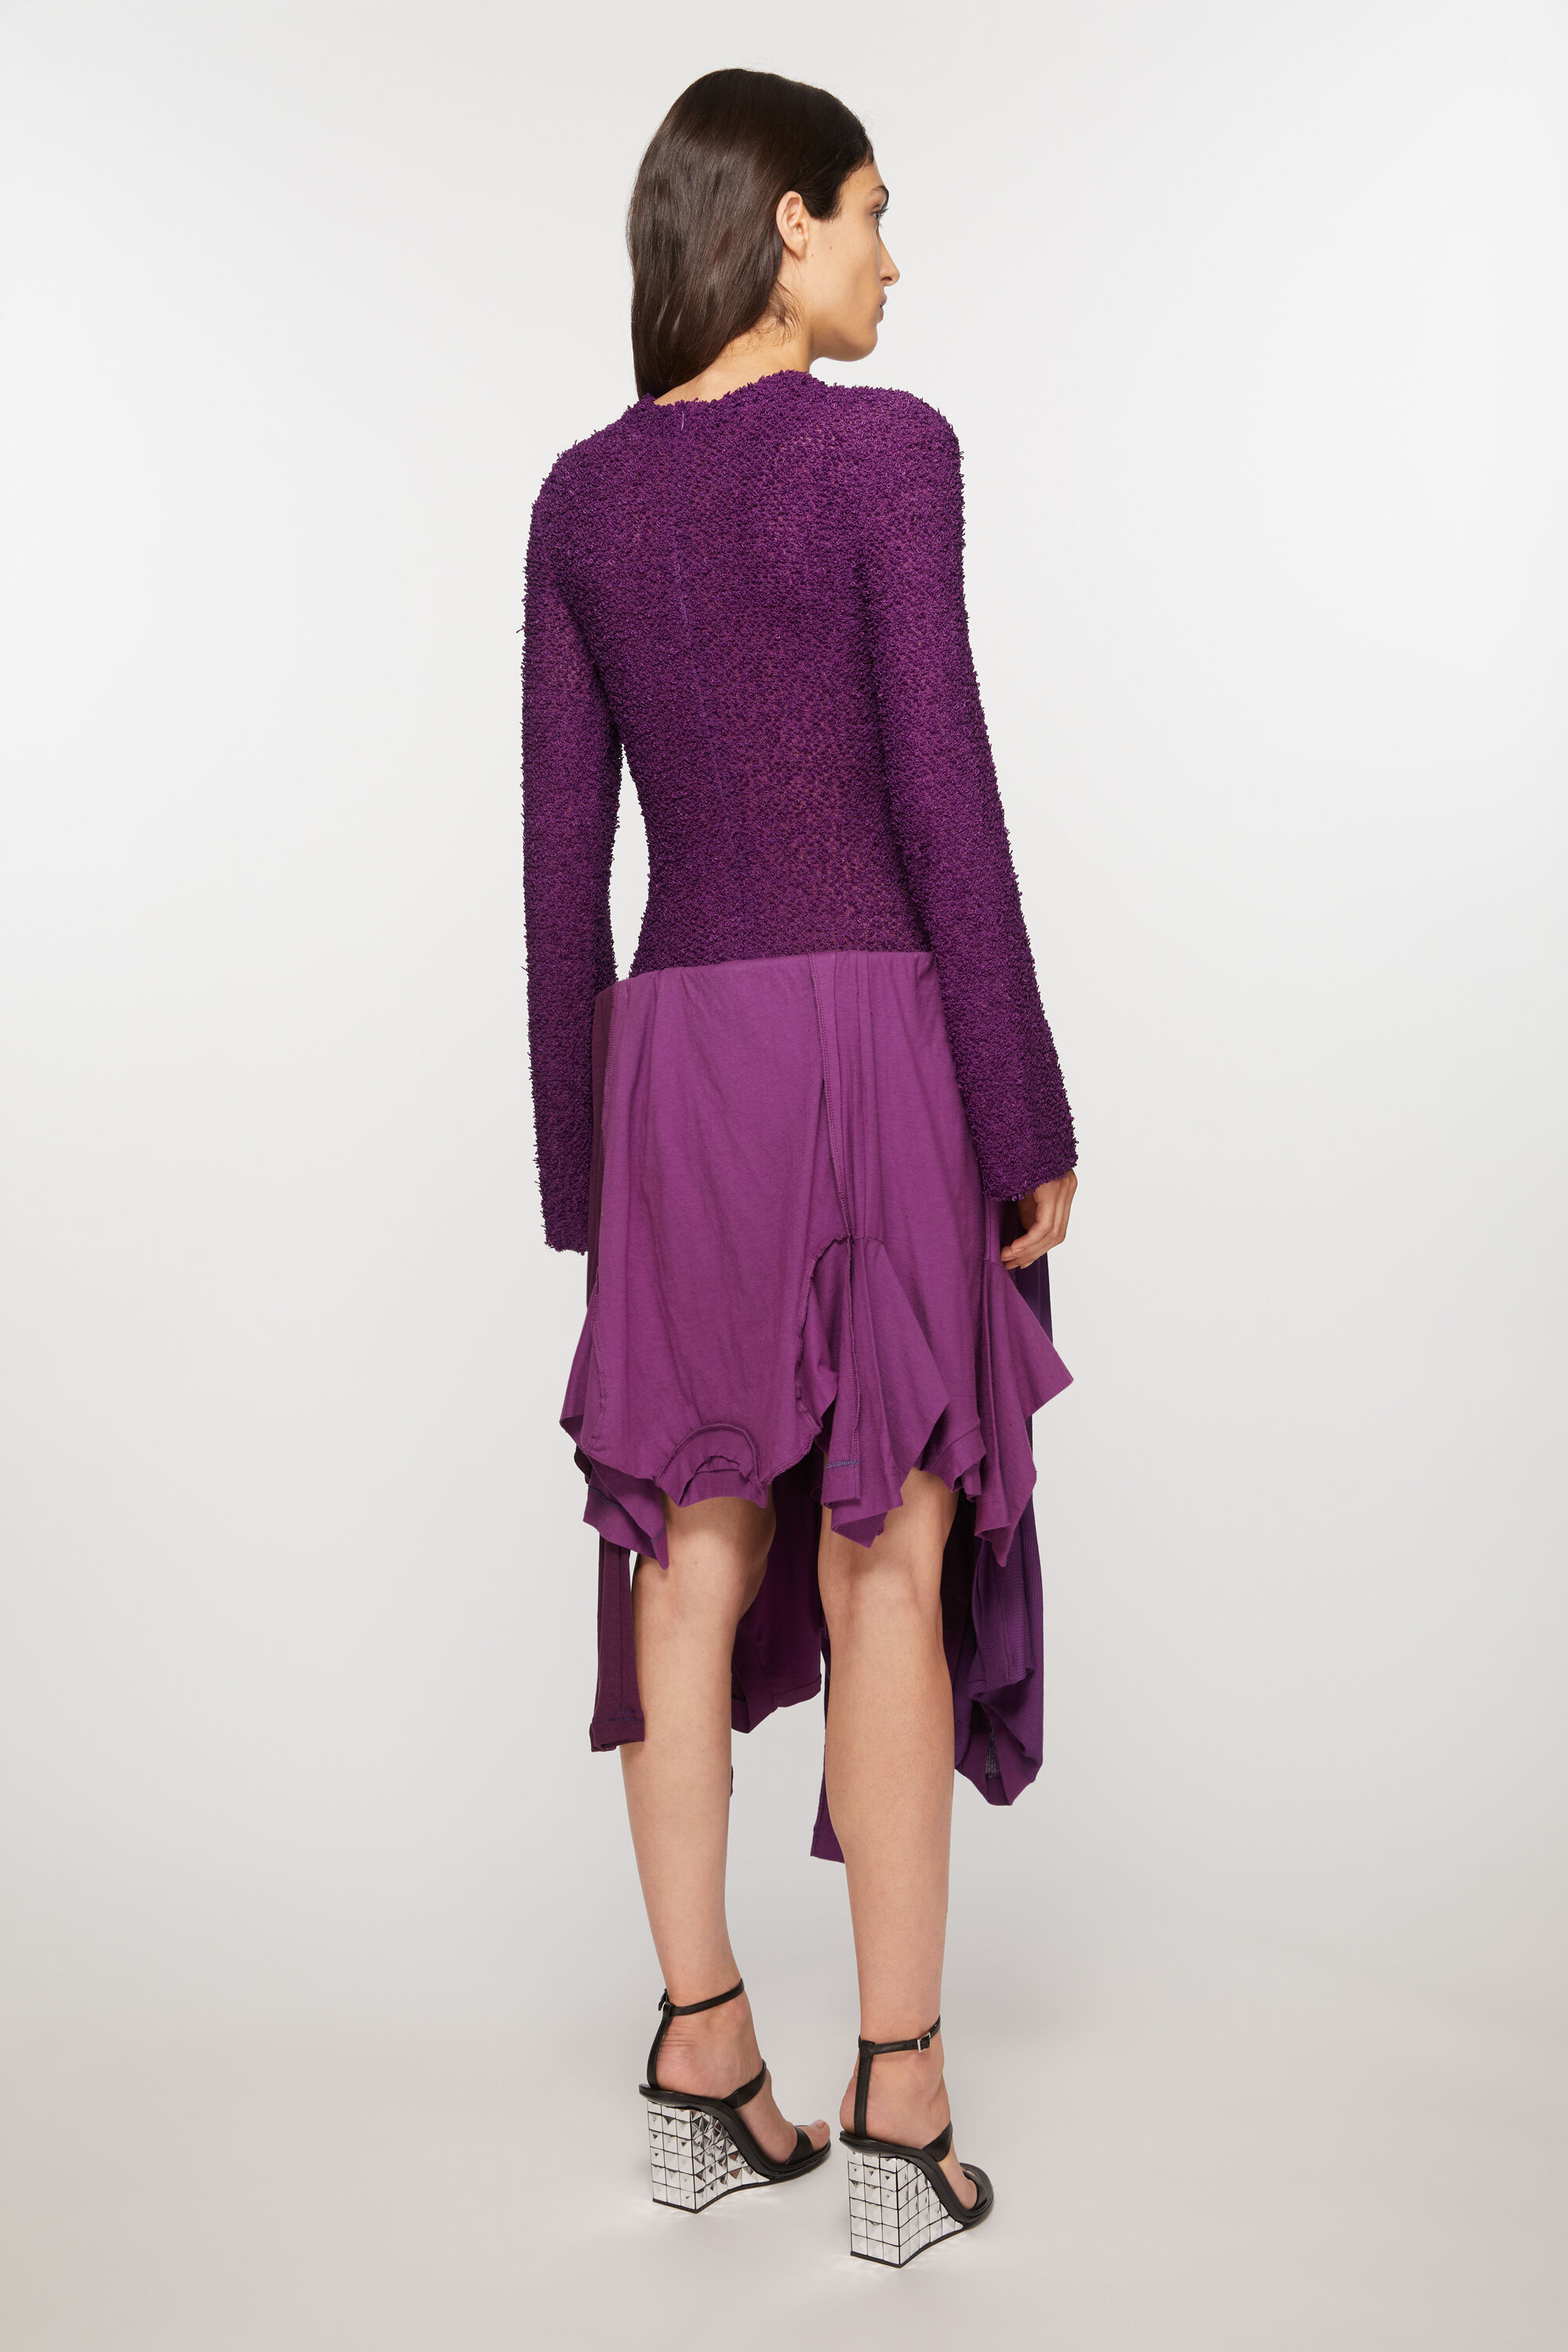 Acne Studios - Layered dress - Bright purple